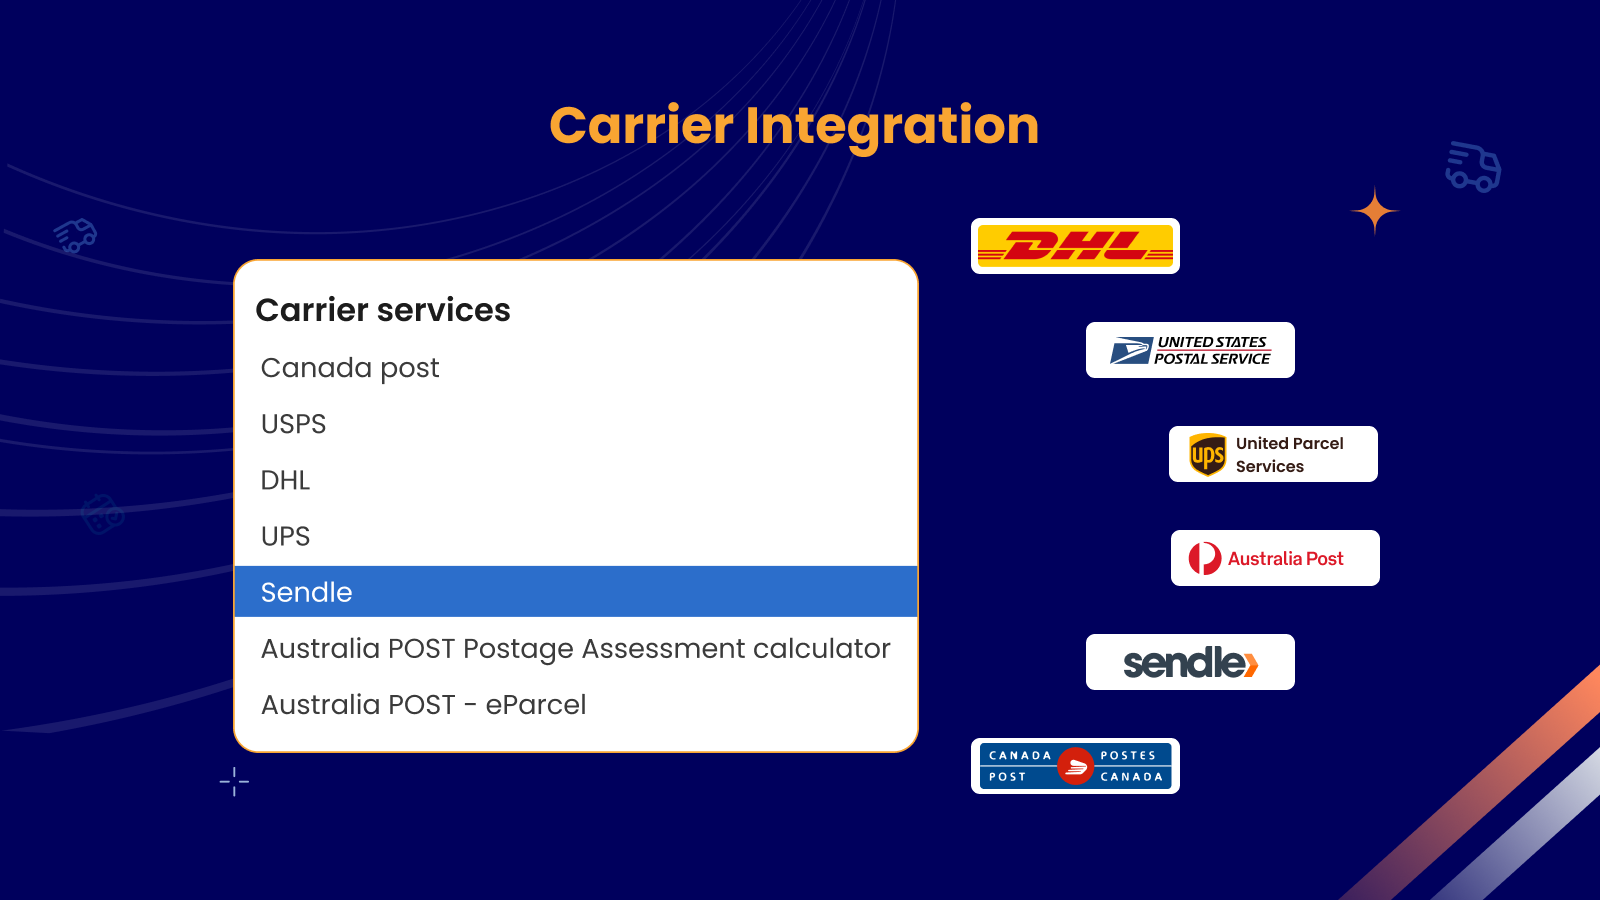 Carrier integration